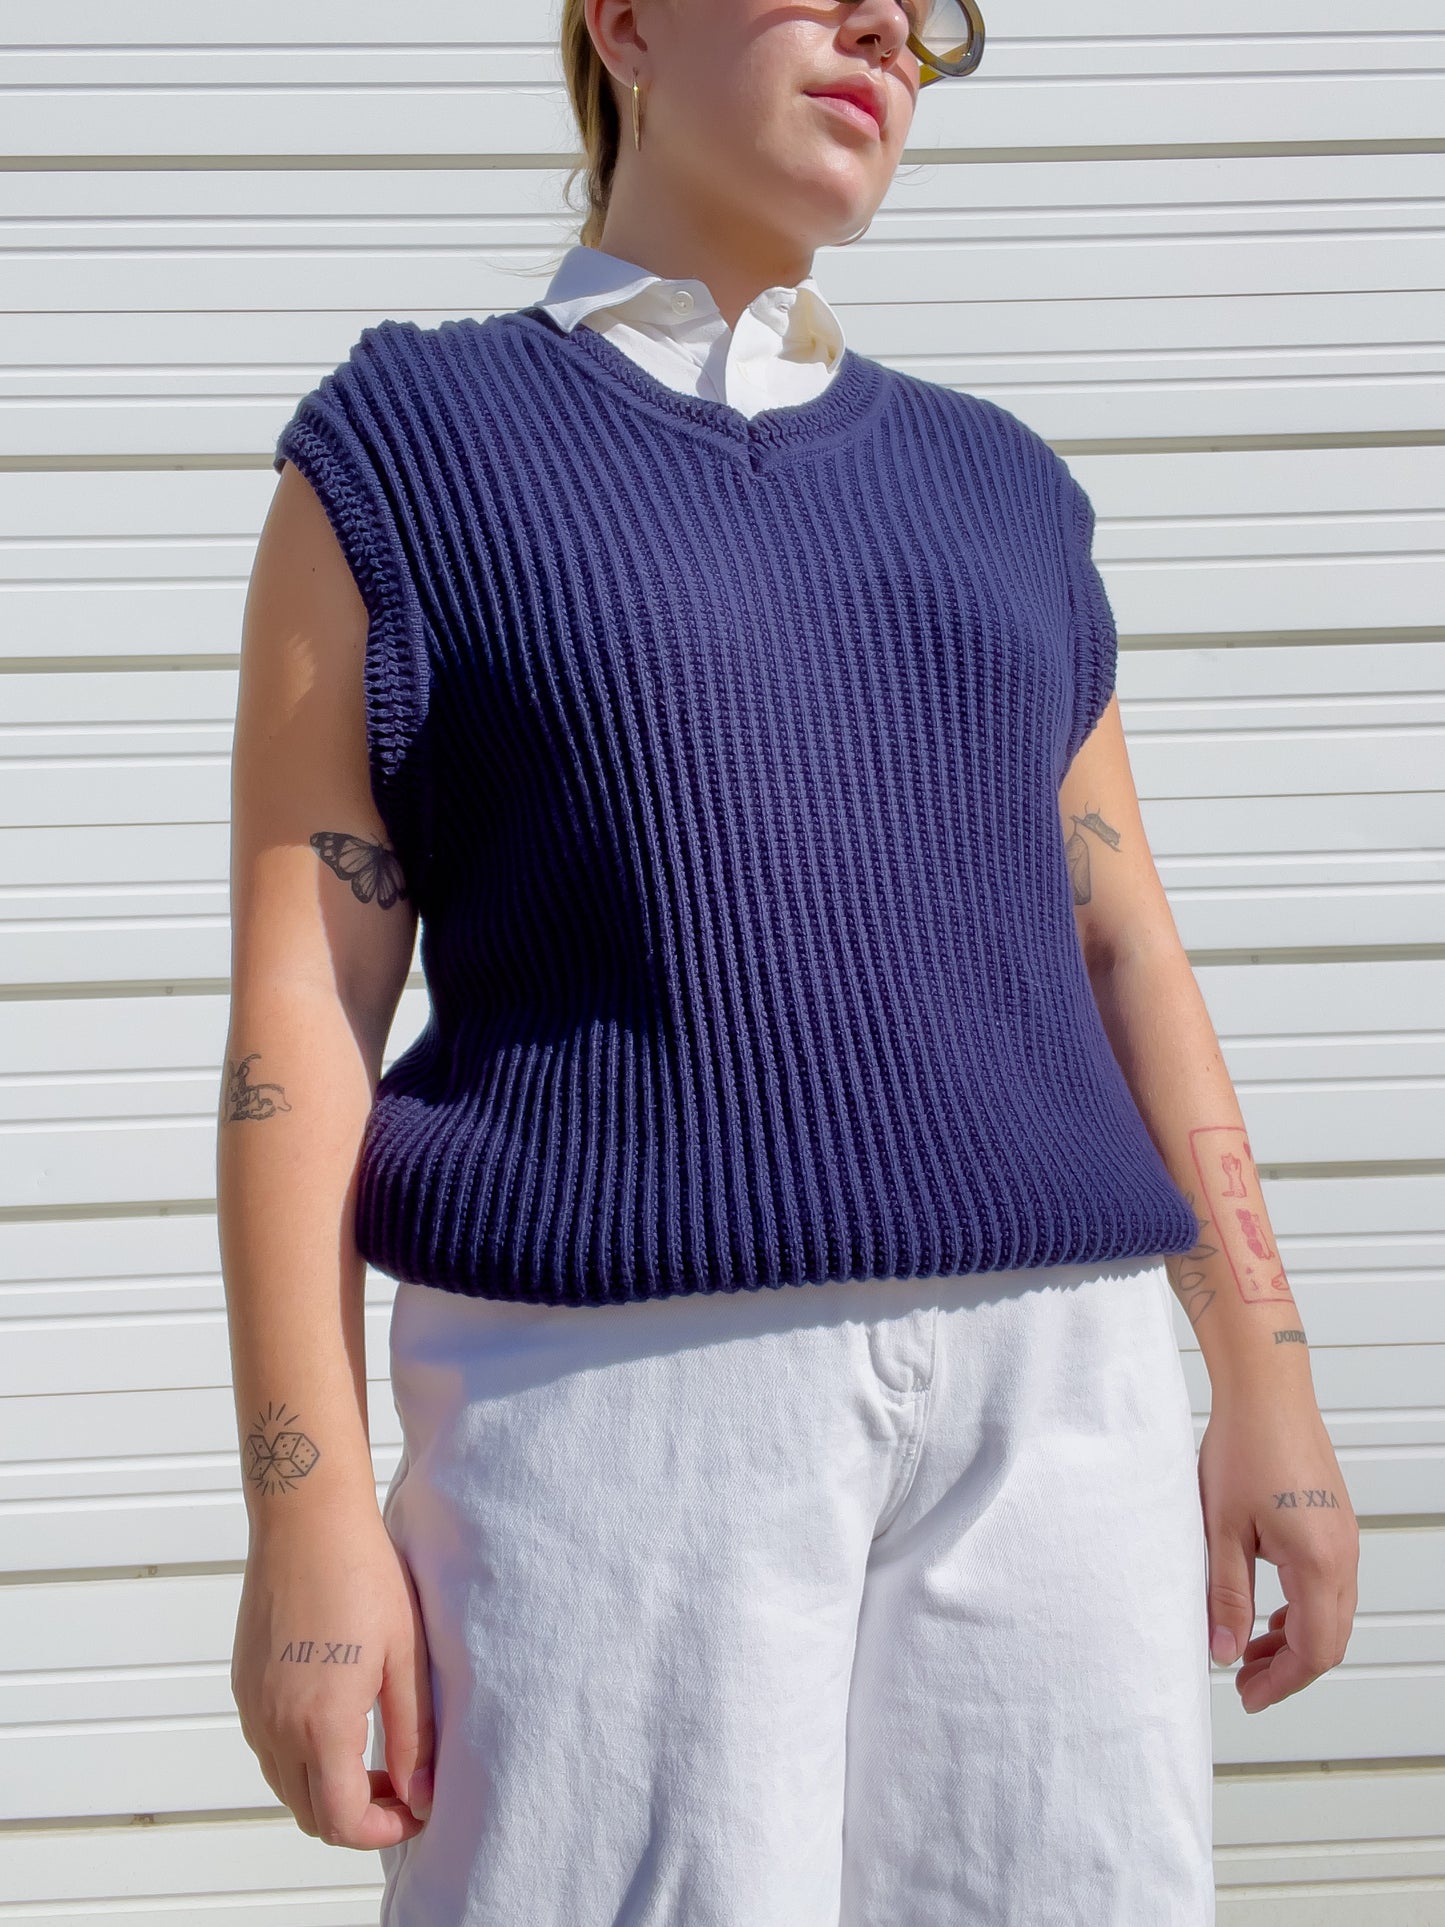 90s Navy Blue Knit Sweater Vest (L/XL)